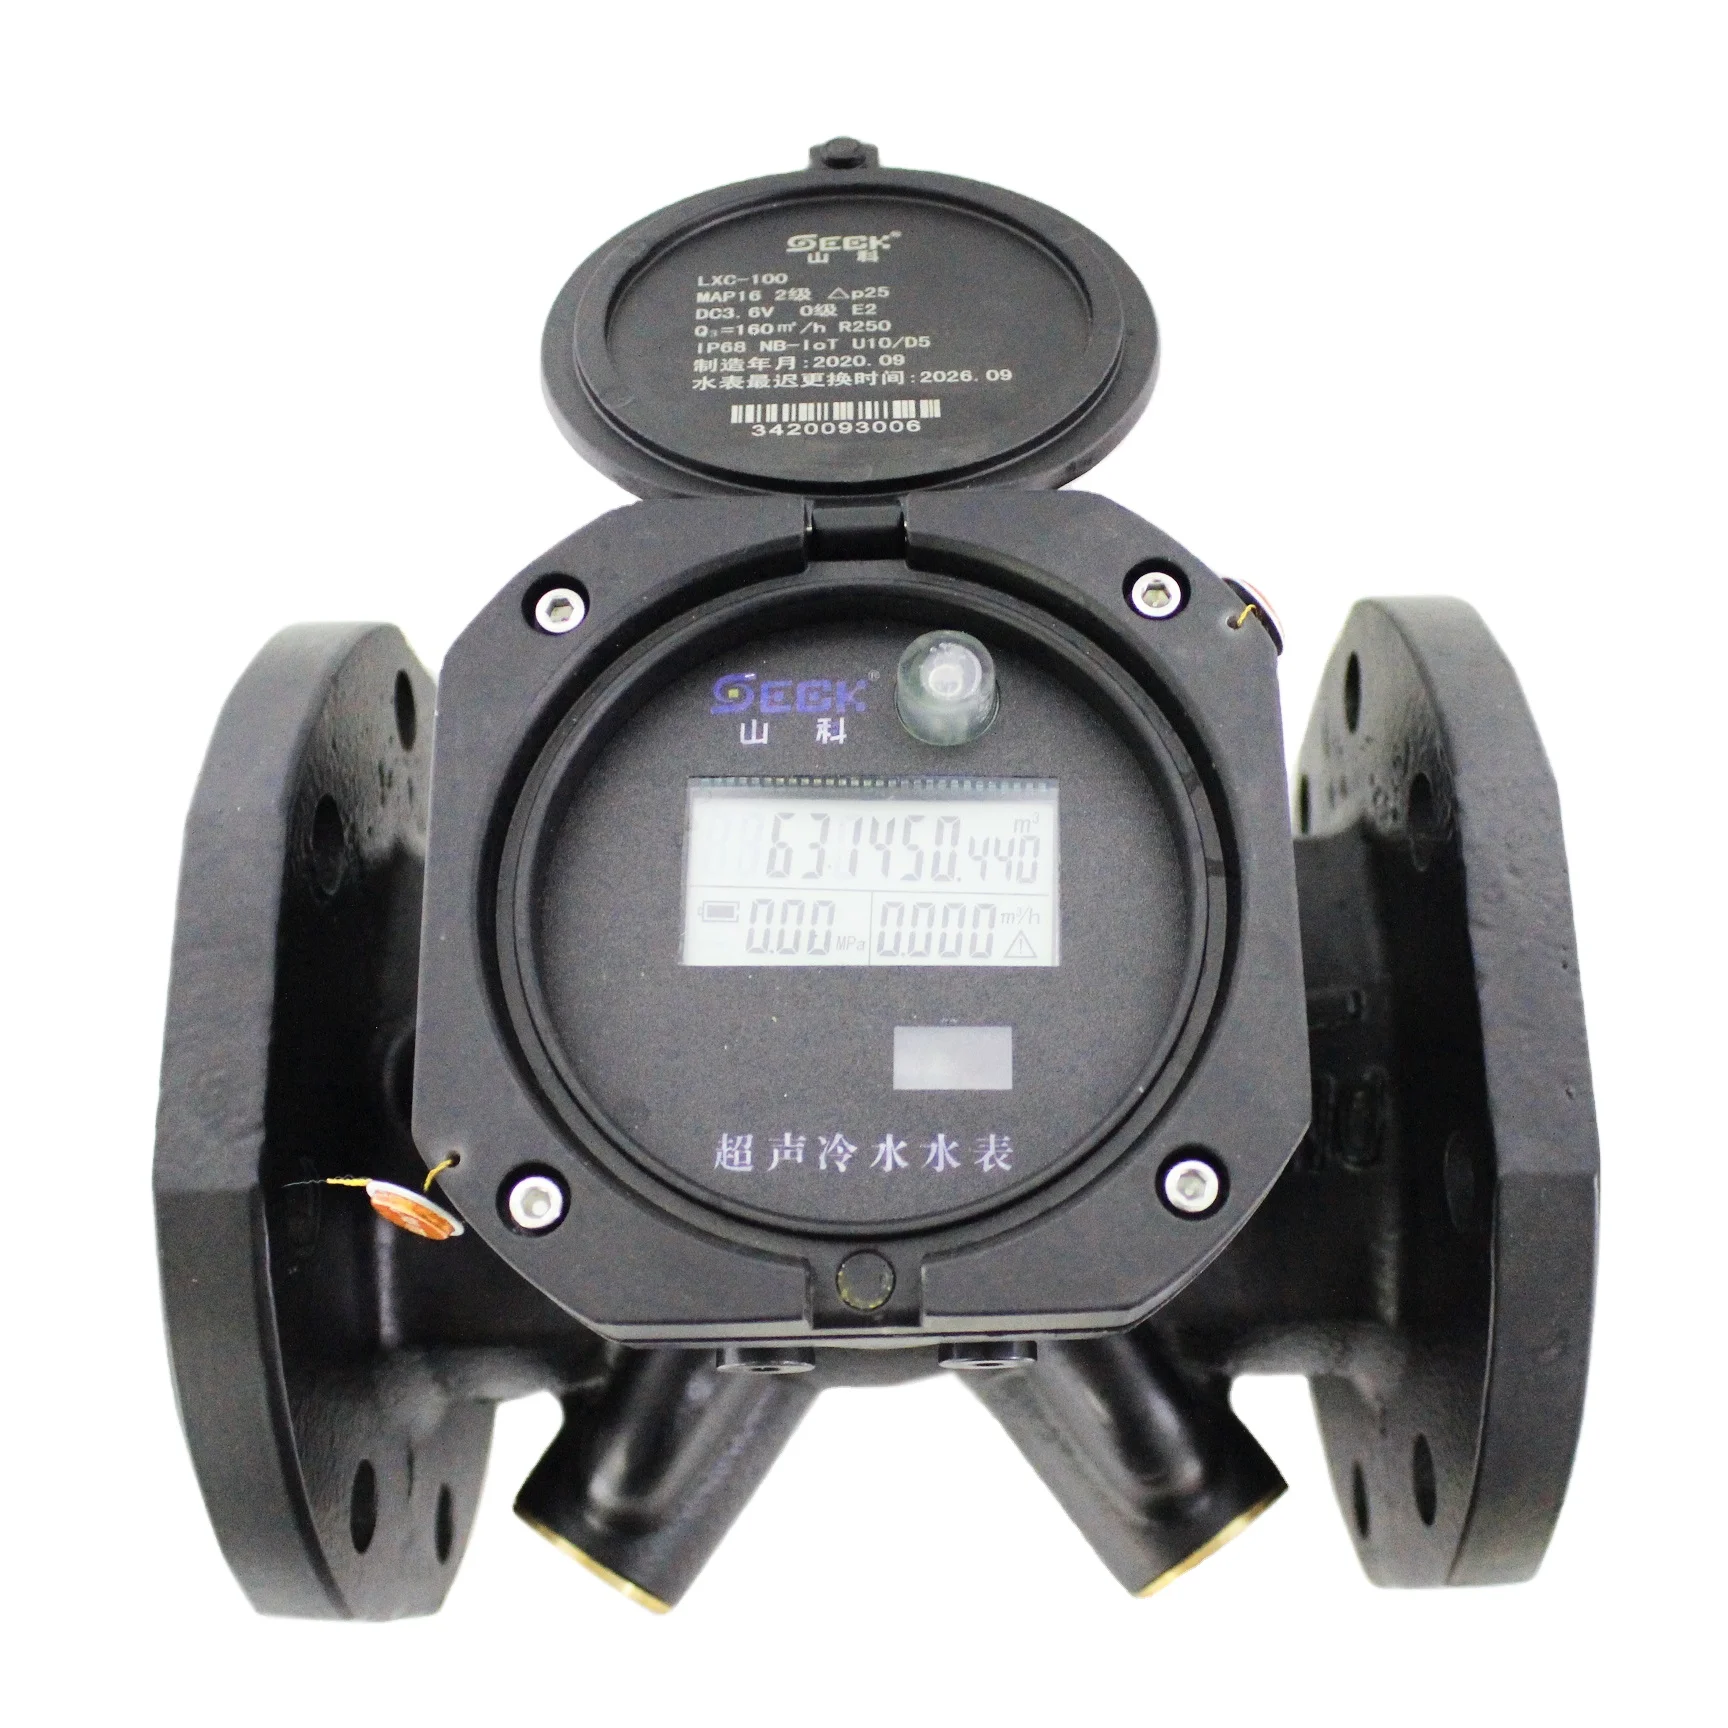 Wireless Communication Ultrasonic Water meter - GSM GPRS NB-IOT